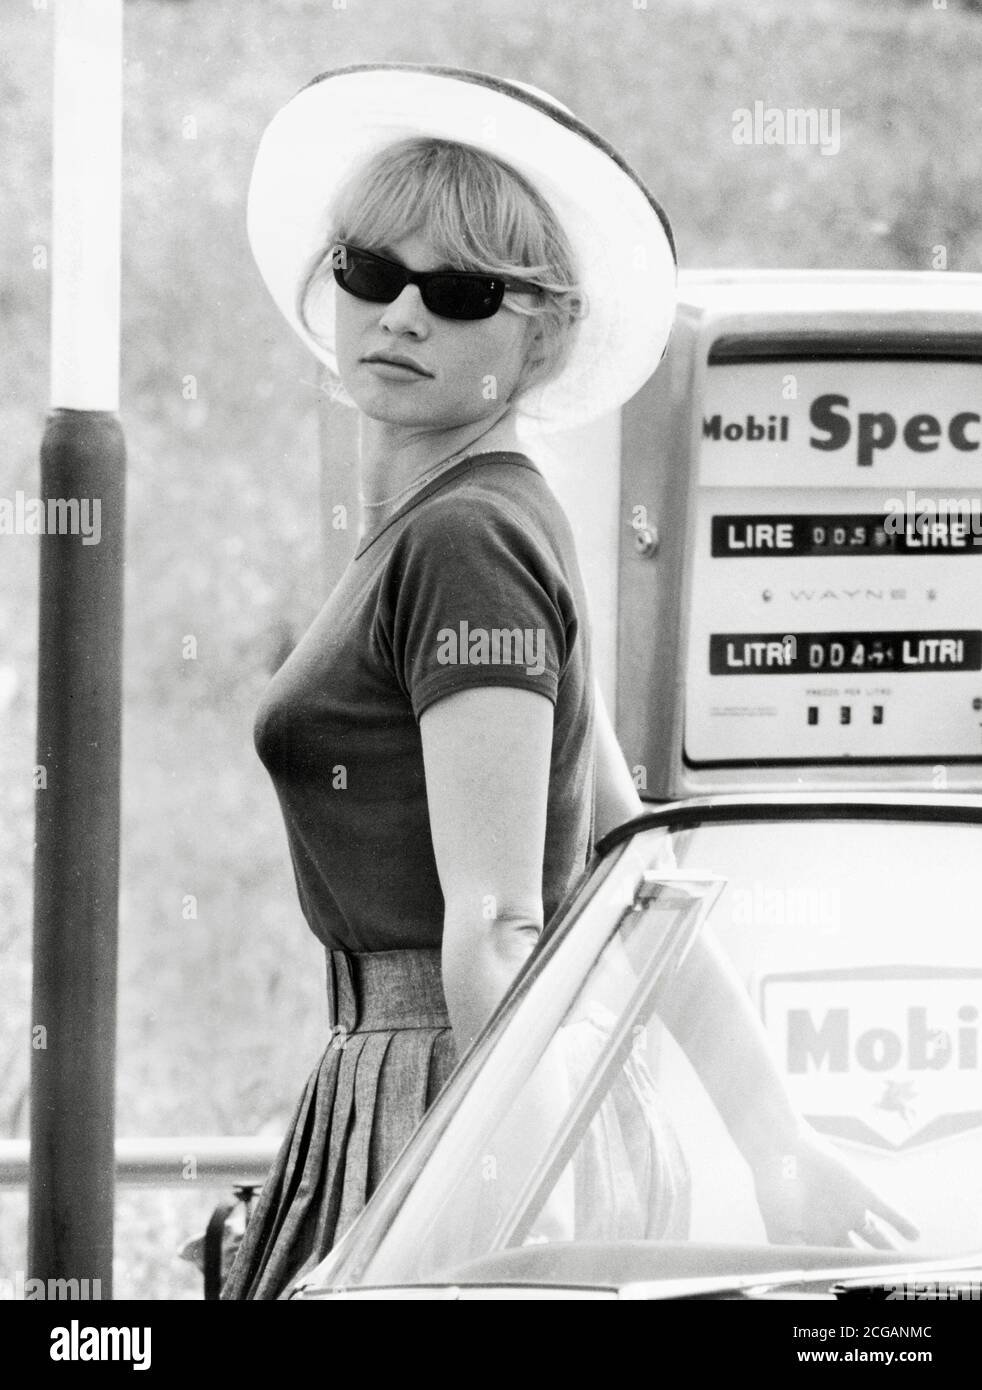 Le mepris brigitte bardot 1963 hi-res stock photography and images - Alamy